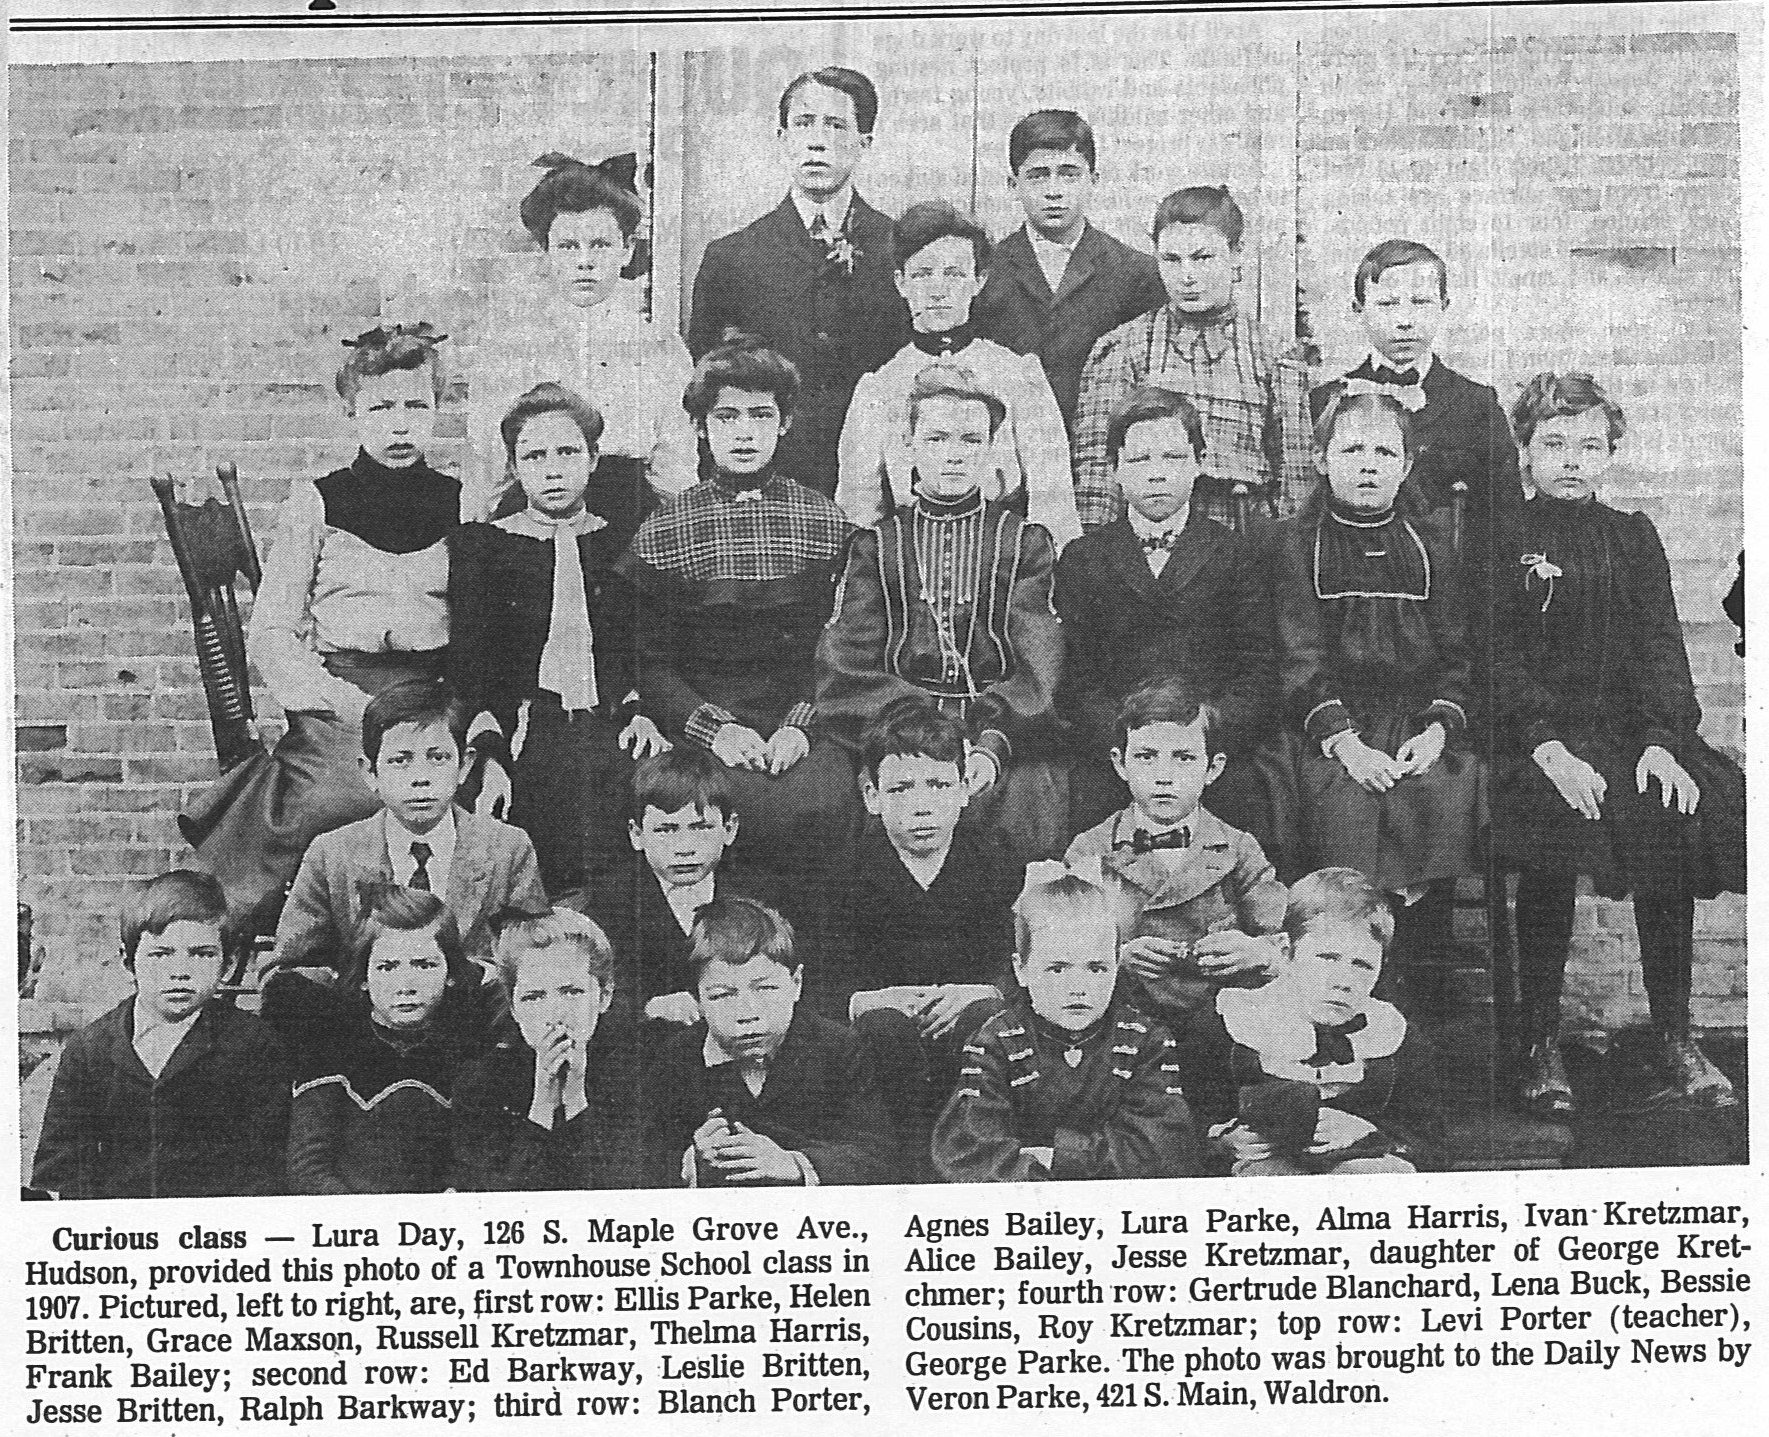 Townhouse School 1907